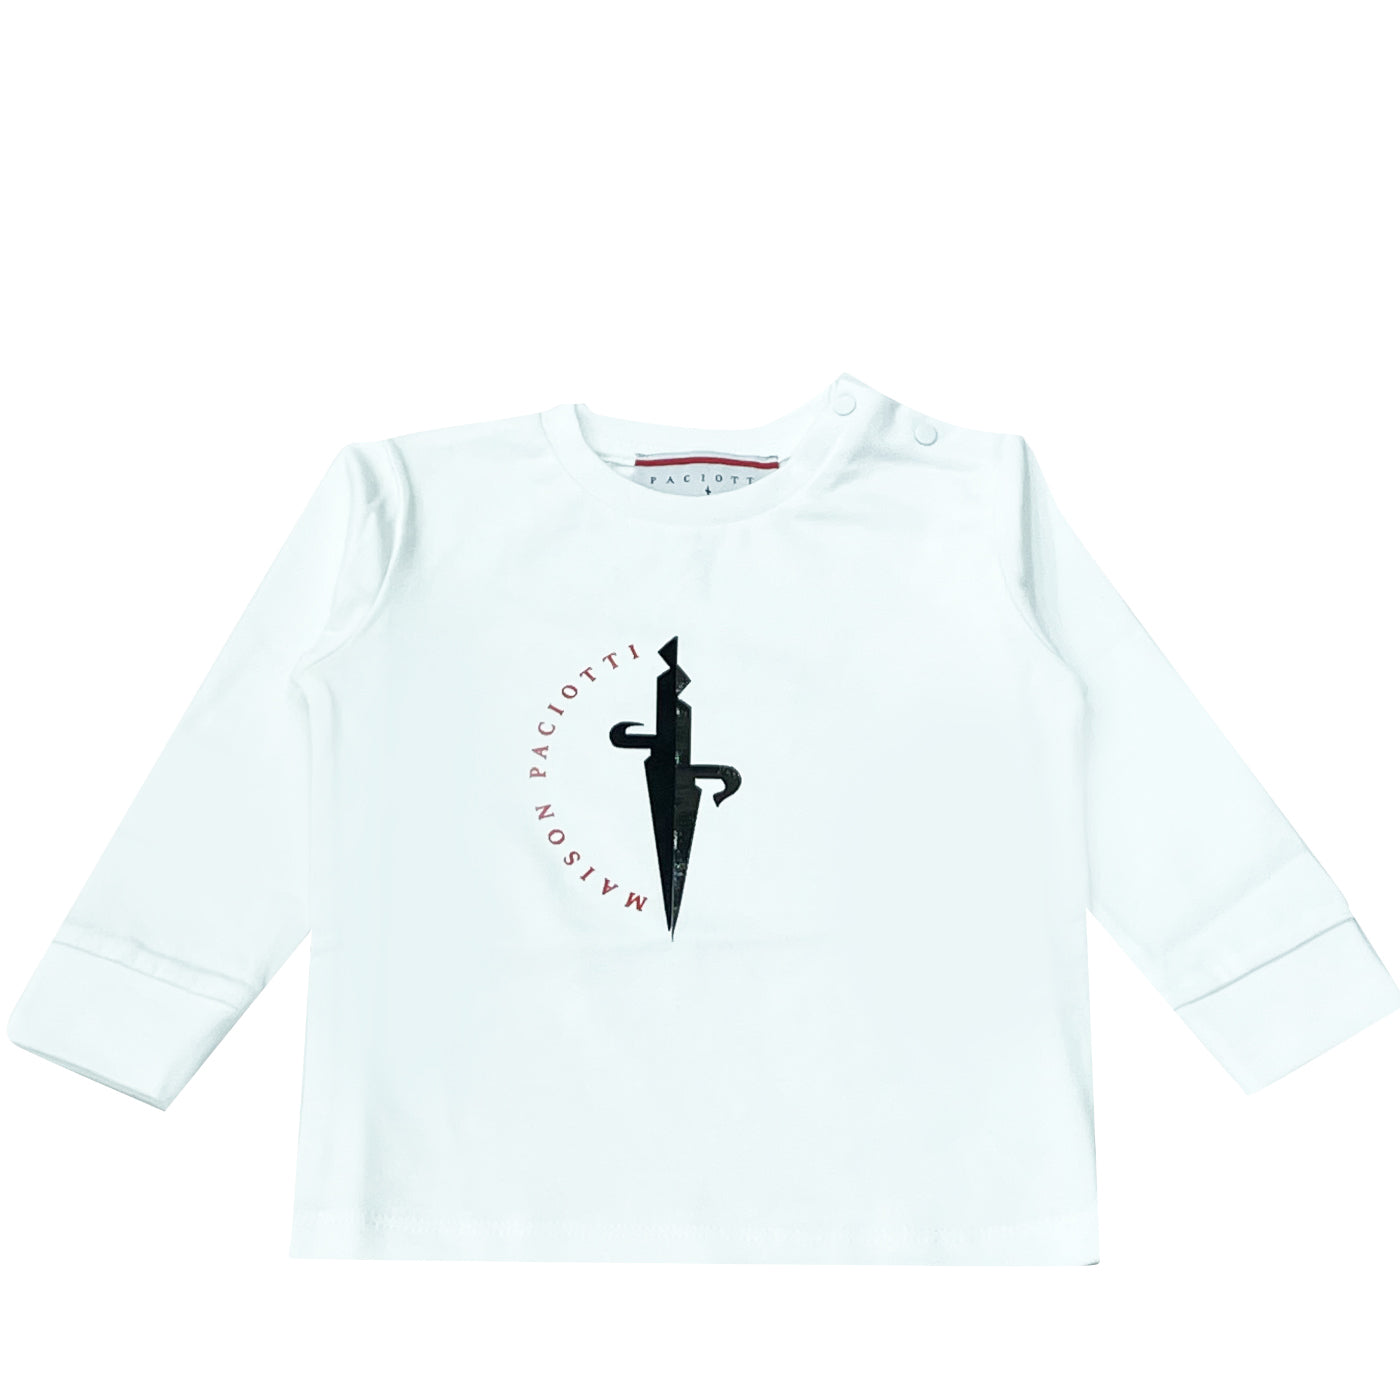 Cesarea Paciotti t-shirt neonato